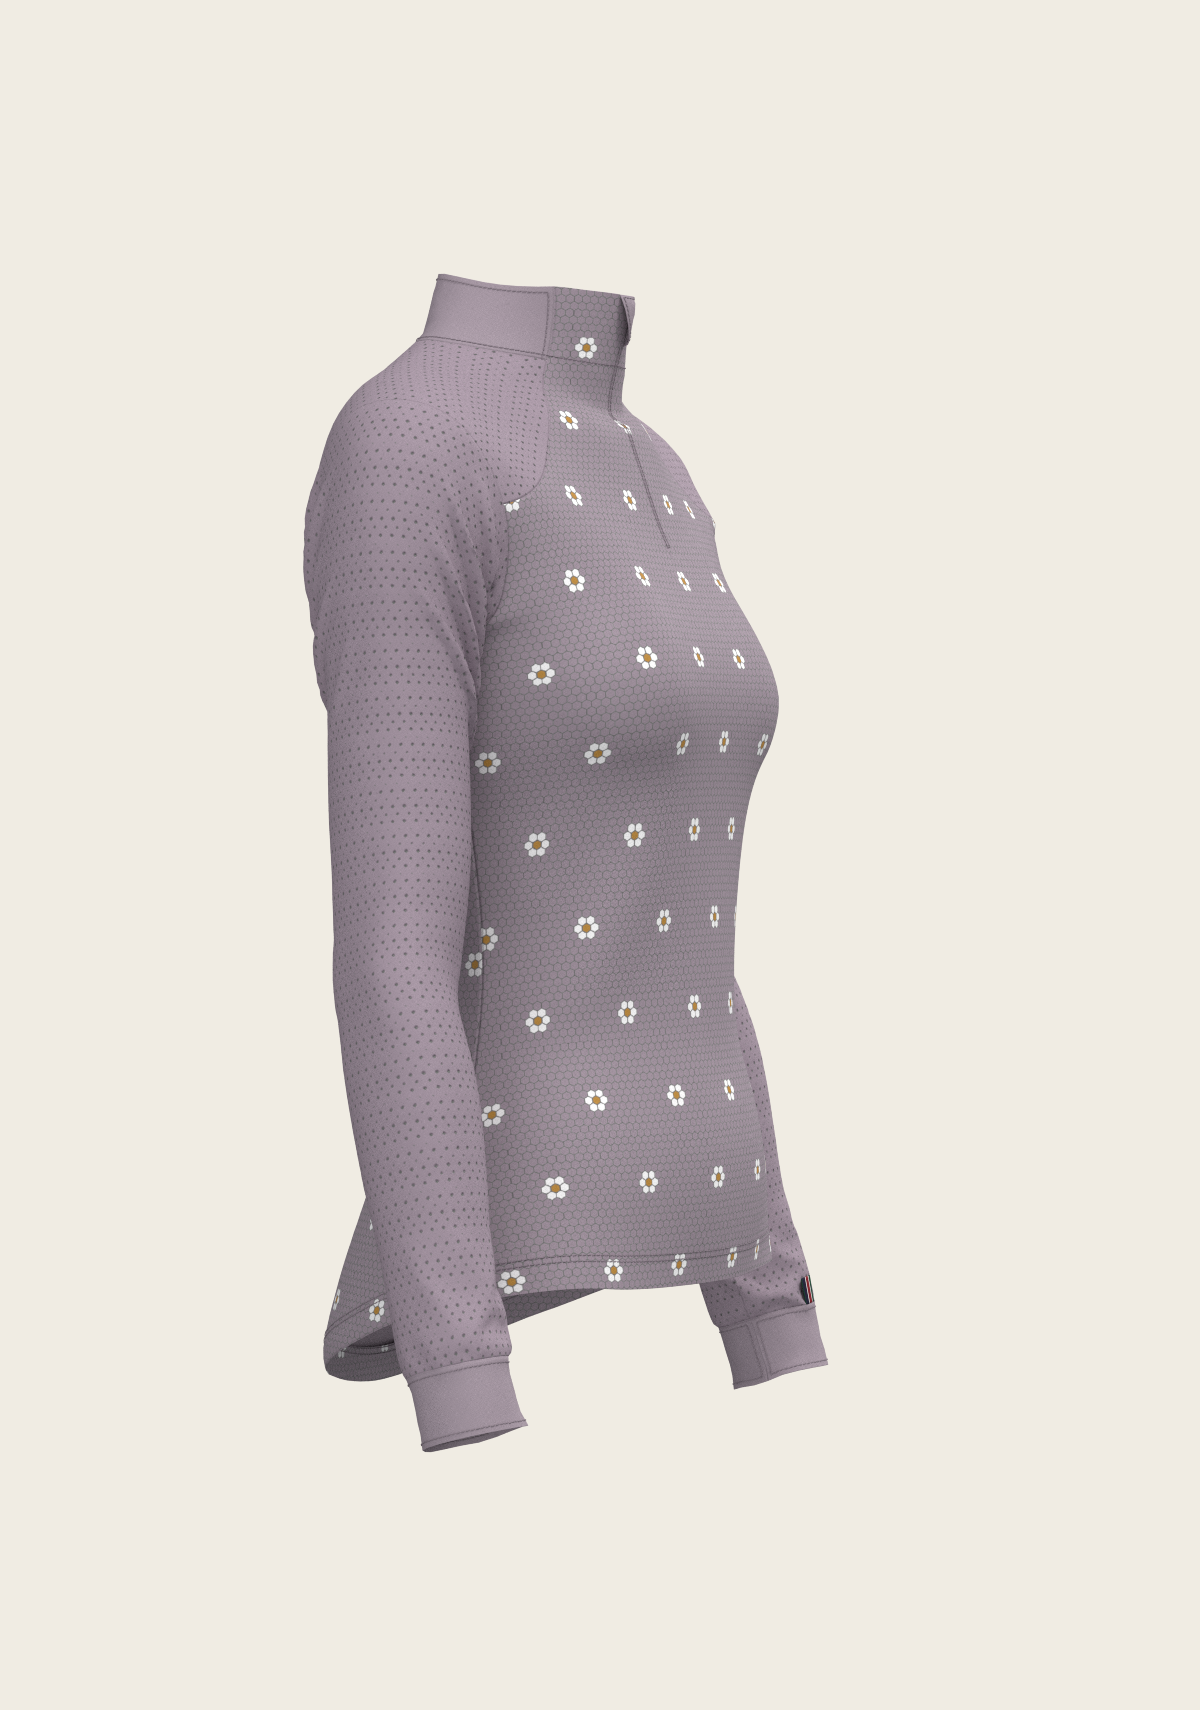 Mosaic Daises in Lavender Long Sleeve Sport Sun Shirt